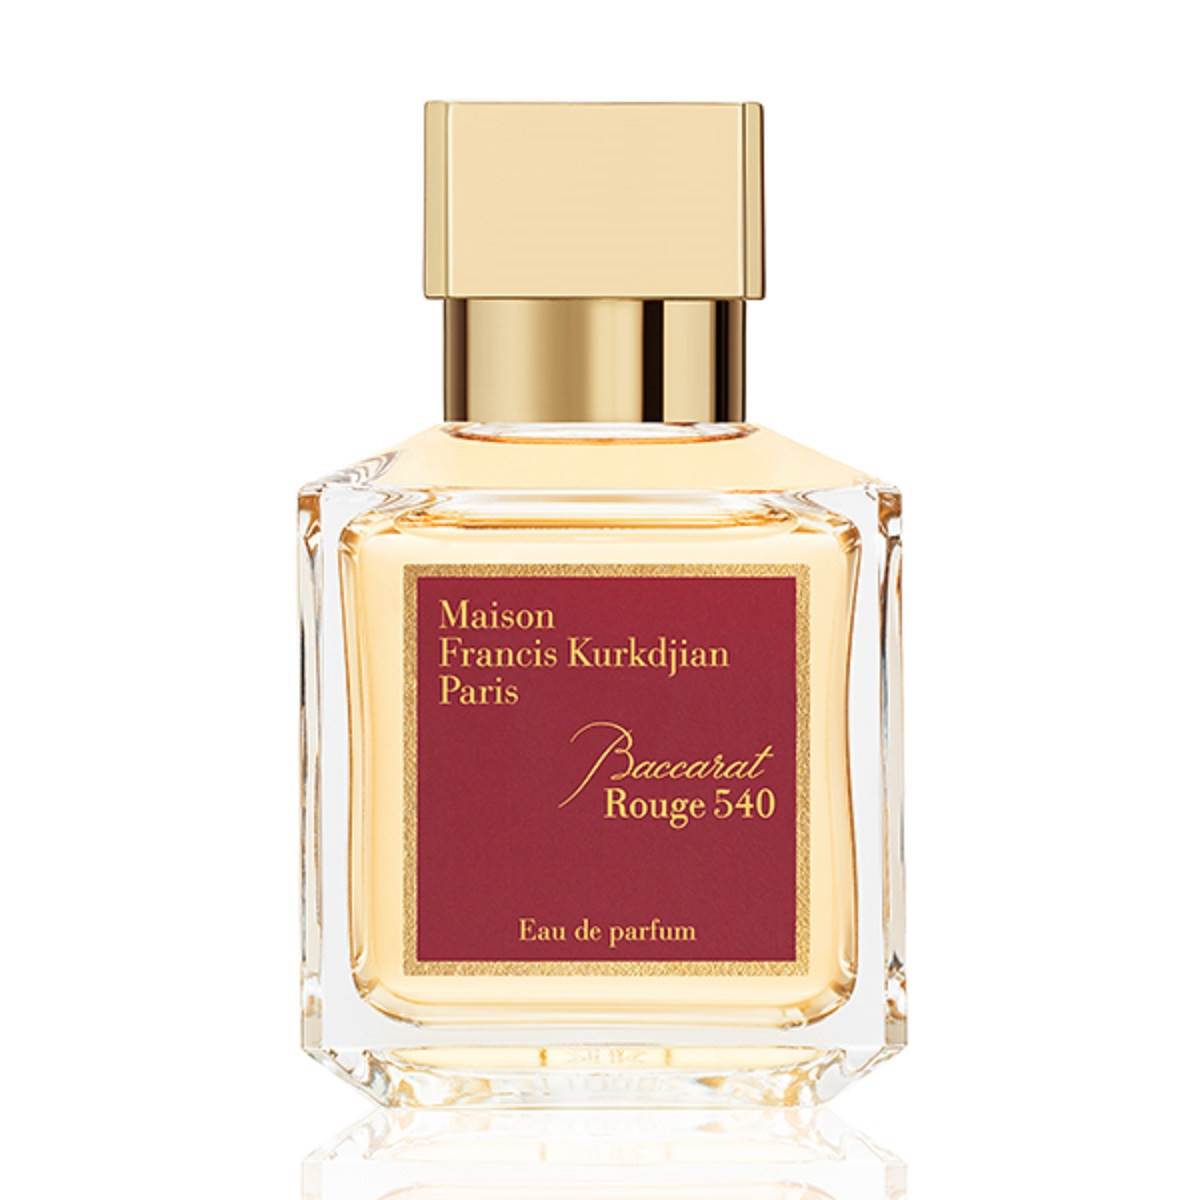  Baccarat Rouge 540 Eau de Parfum, Maison Francis Kurkdjian 